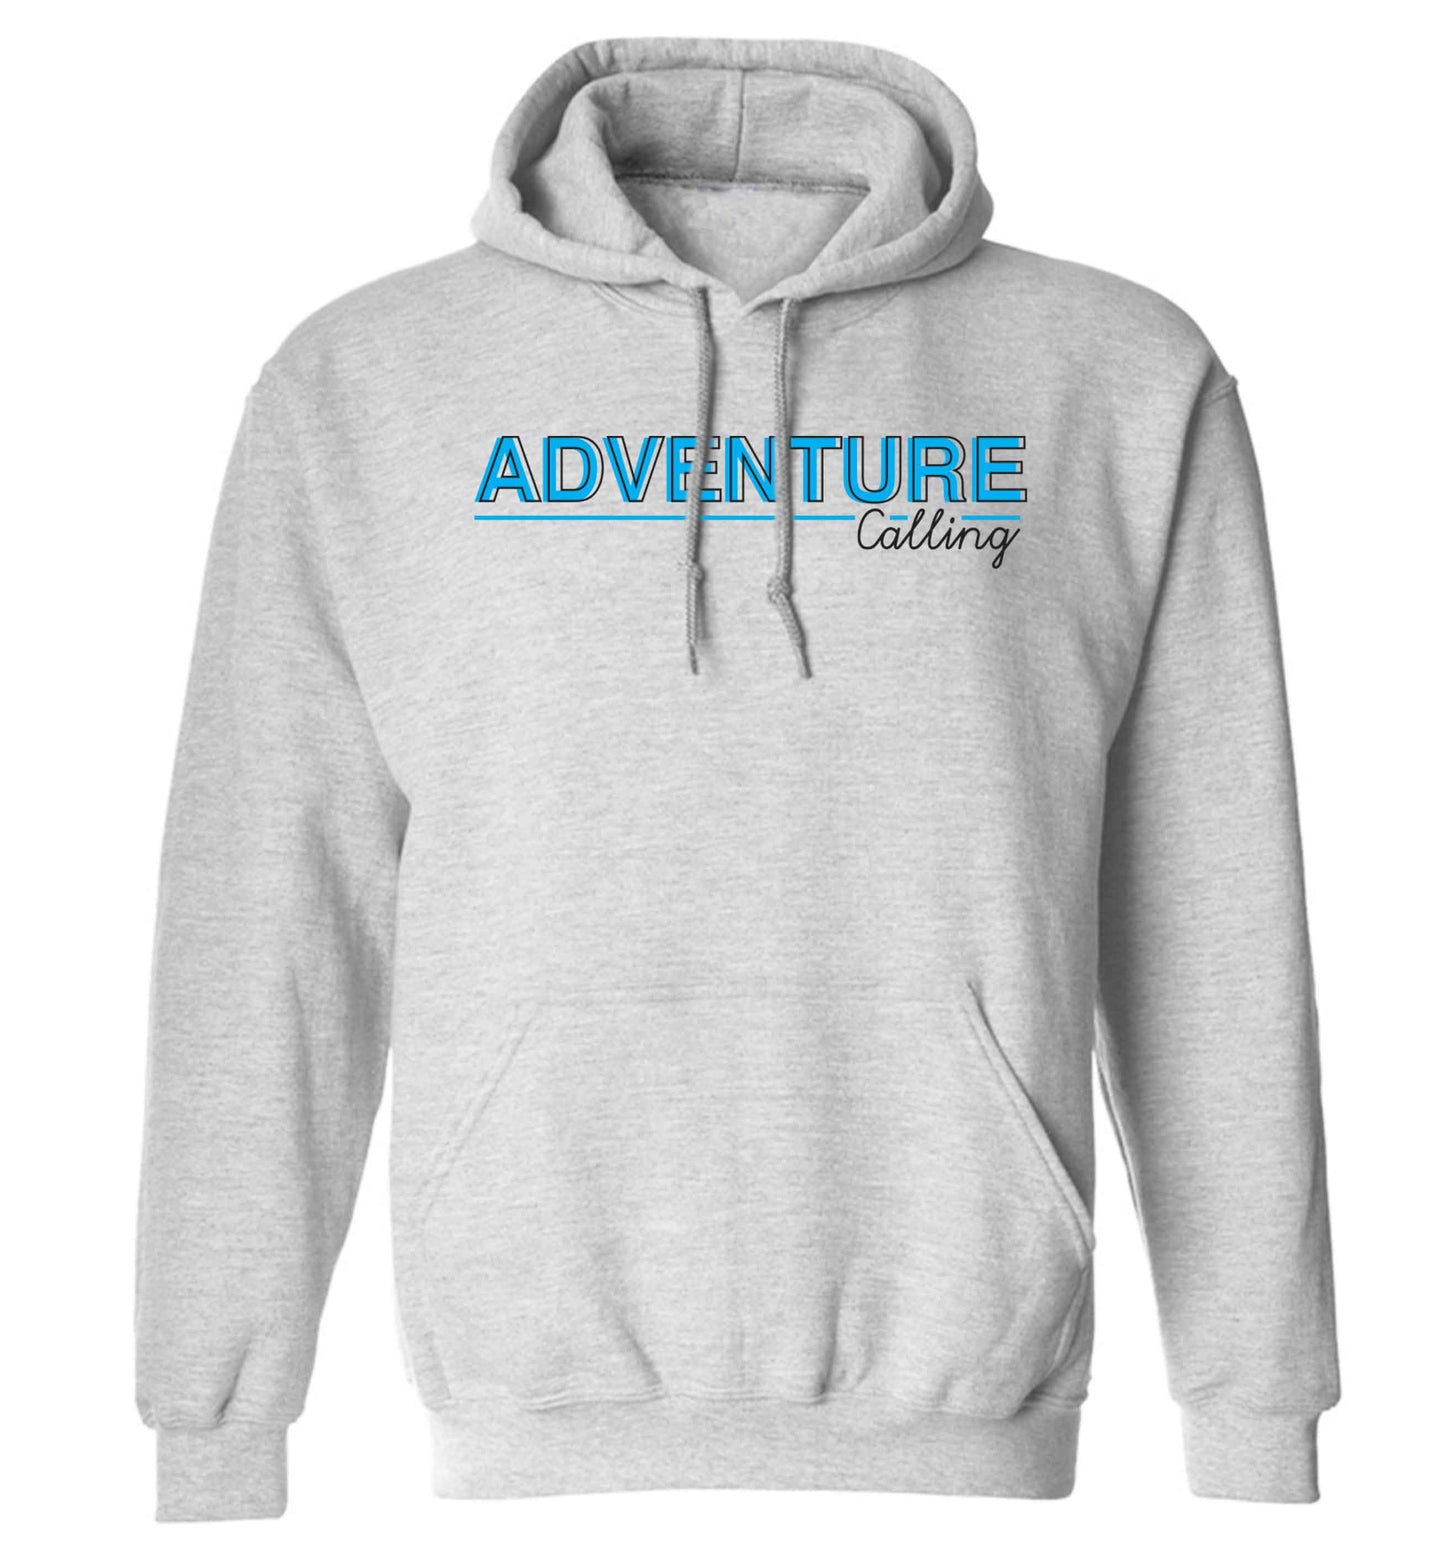 Adventure calling adults unisex grey hoodie 2XL